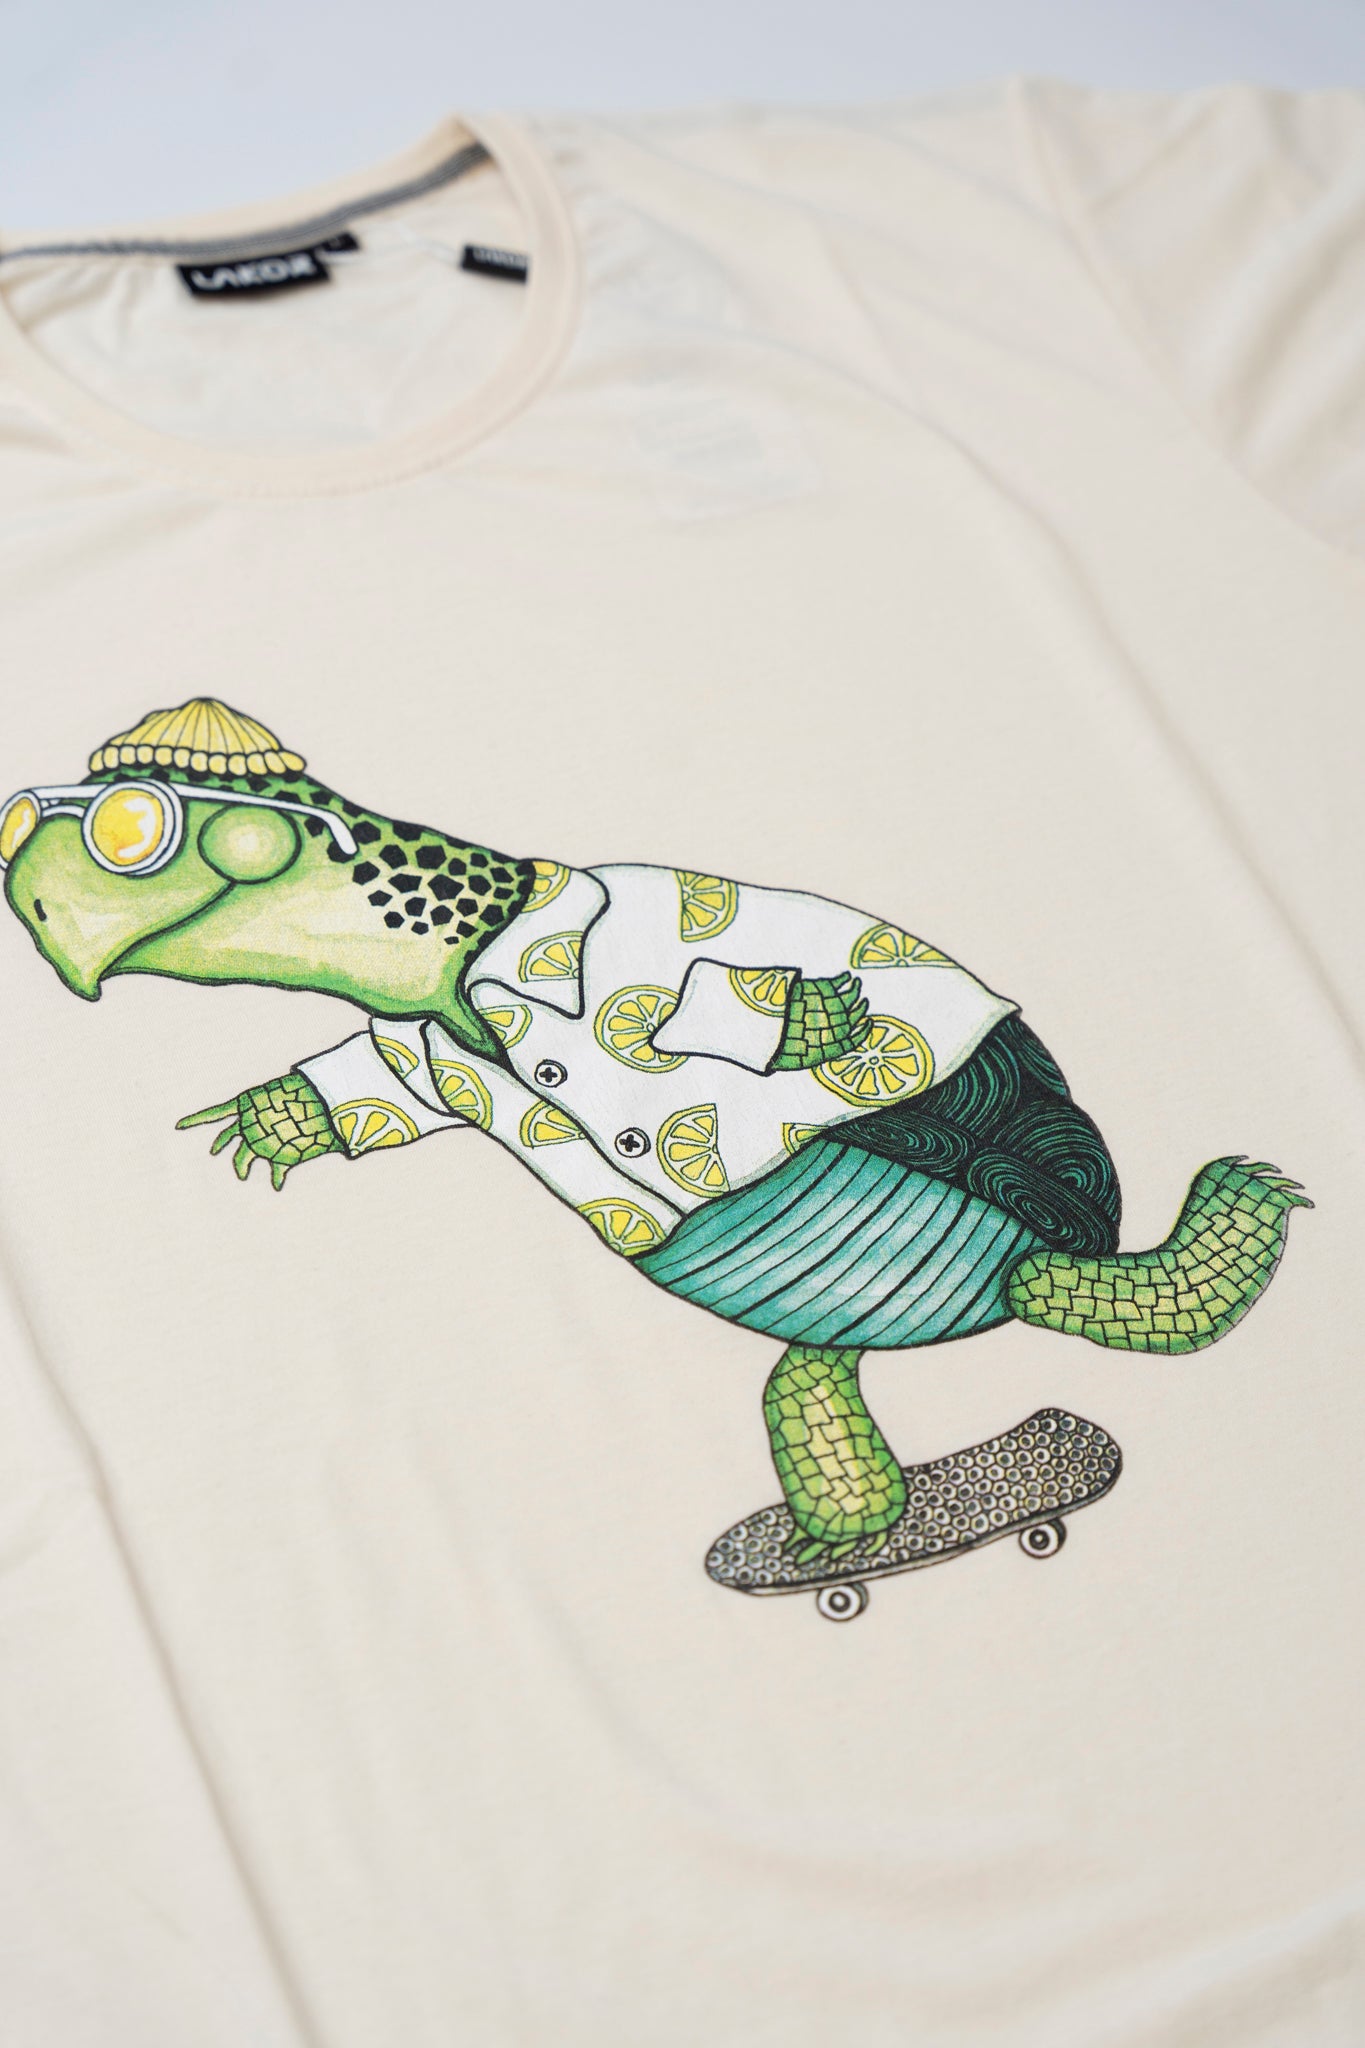 Turbo Turtle T-shirt (Off White)